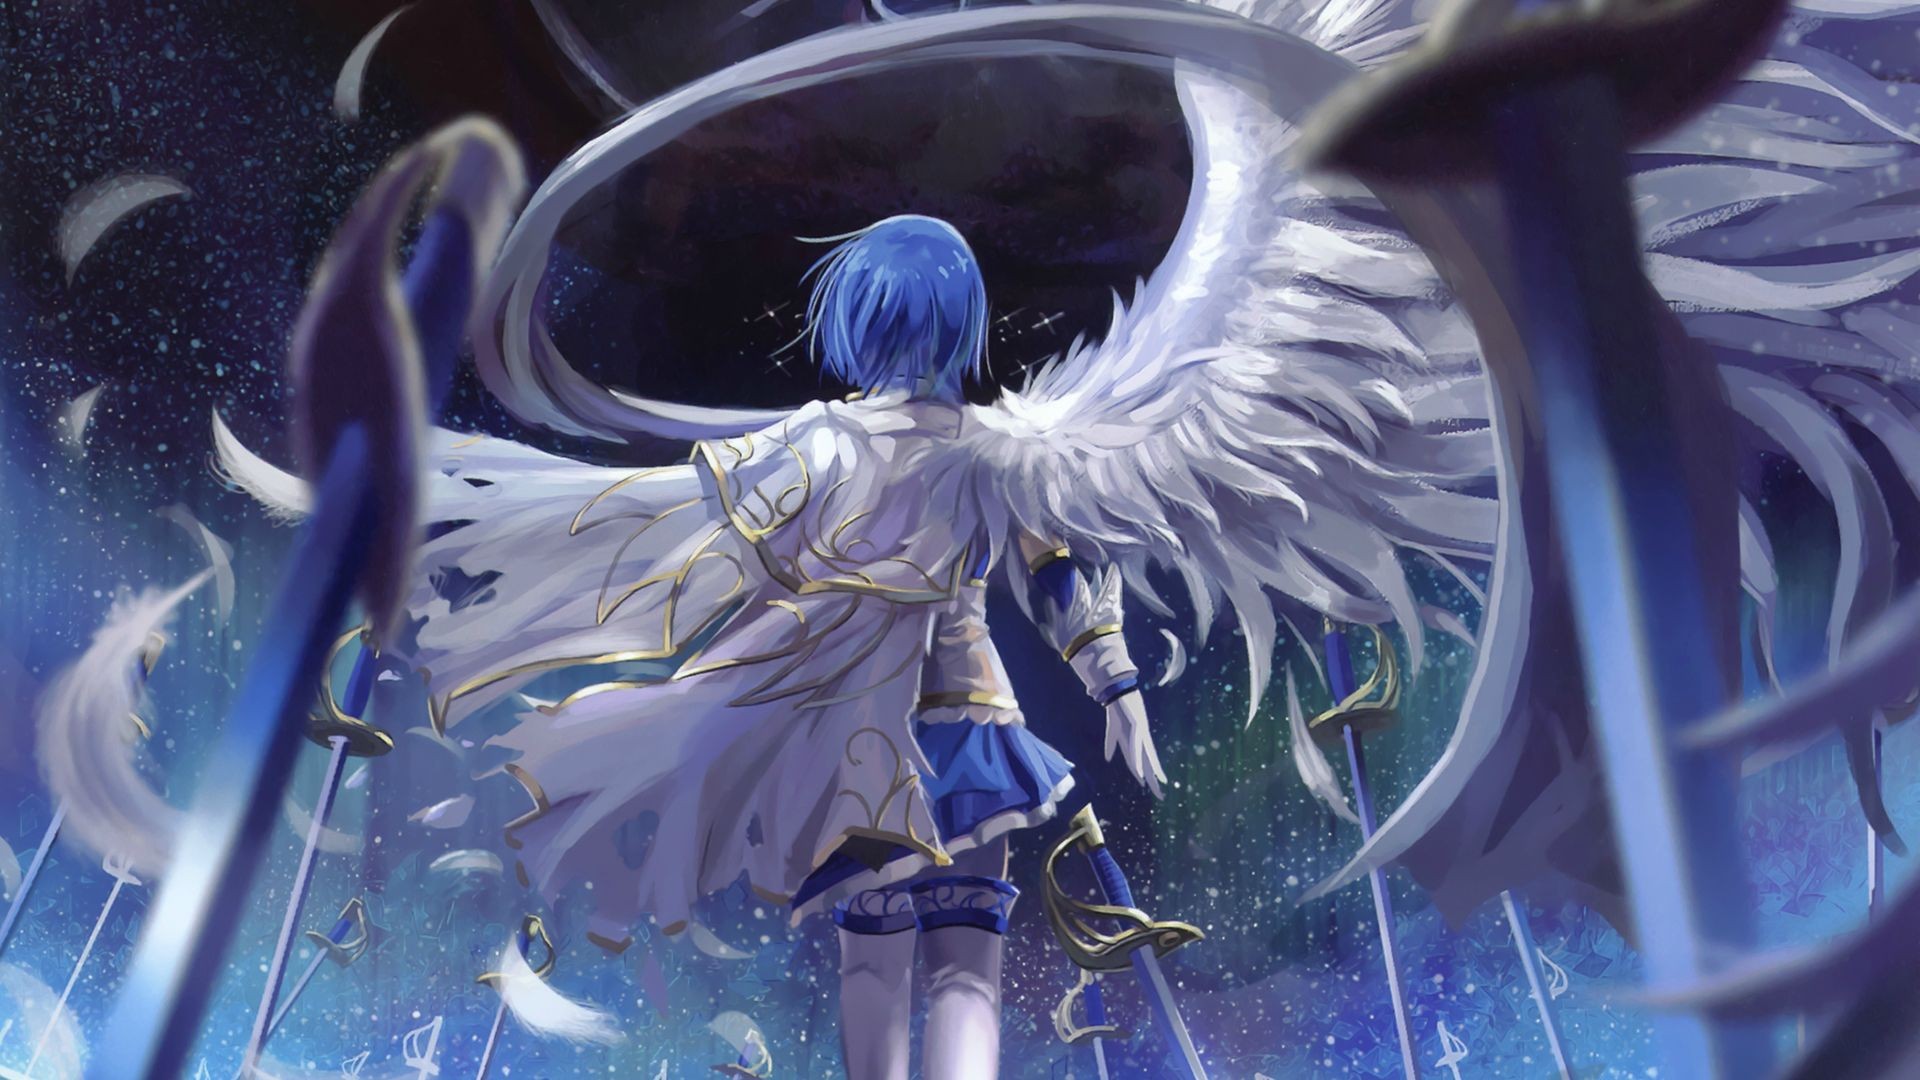 Anime 1920x1080 Mahou Shoujo Madoka Magica anime girls wings blue hair anime fantasy art fantasy girl feathers sword